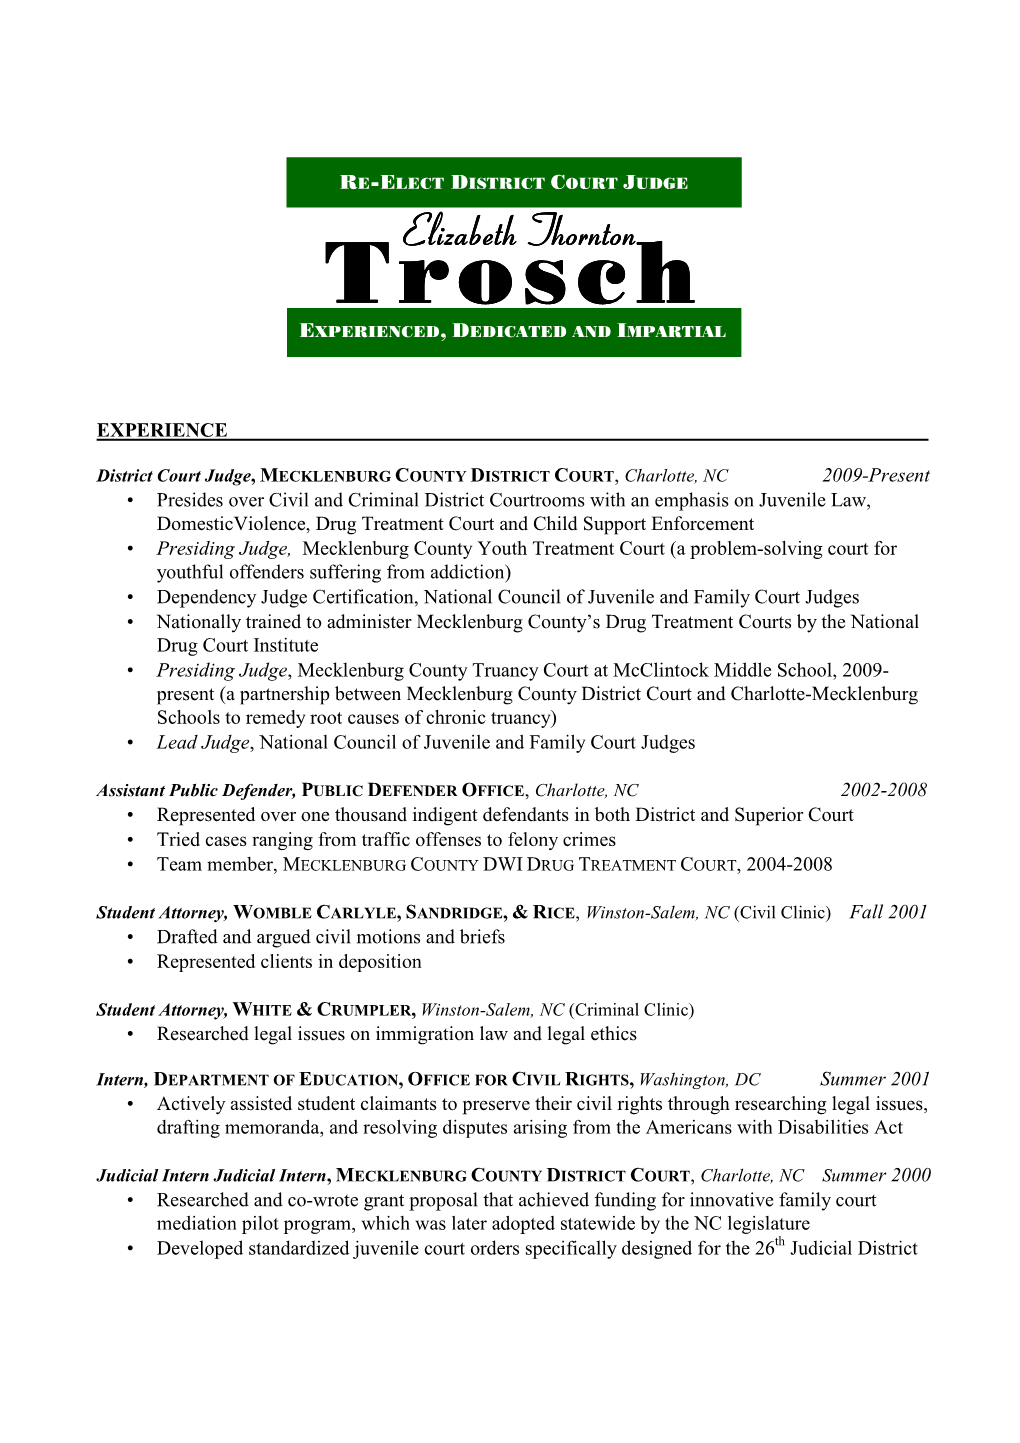 Elizabeth Thornton Trosch for Judge Resume 11-3-11